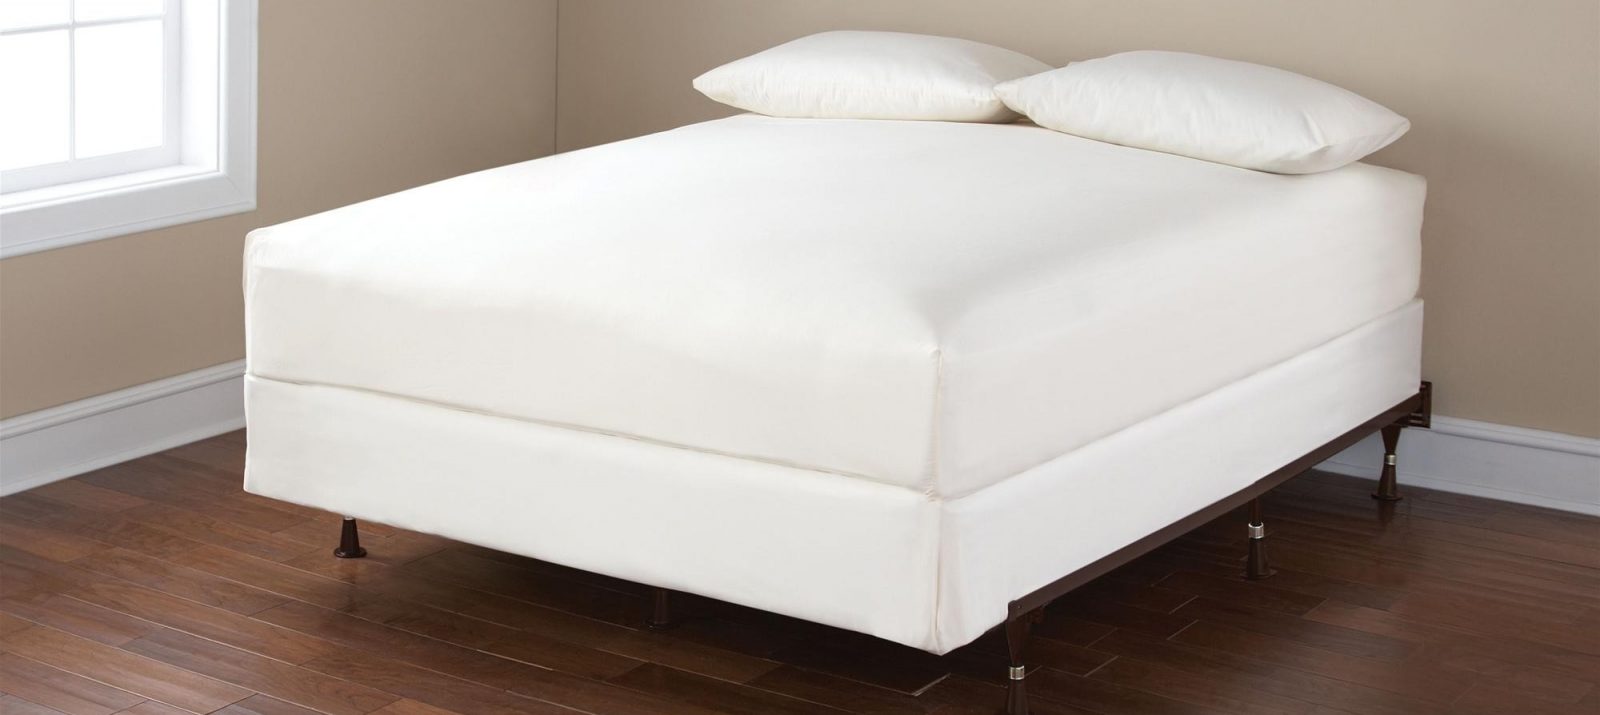 bed in a box vs mattress store